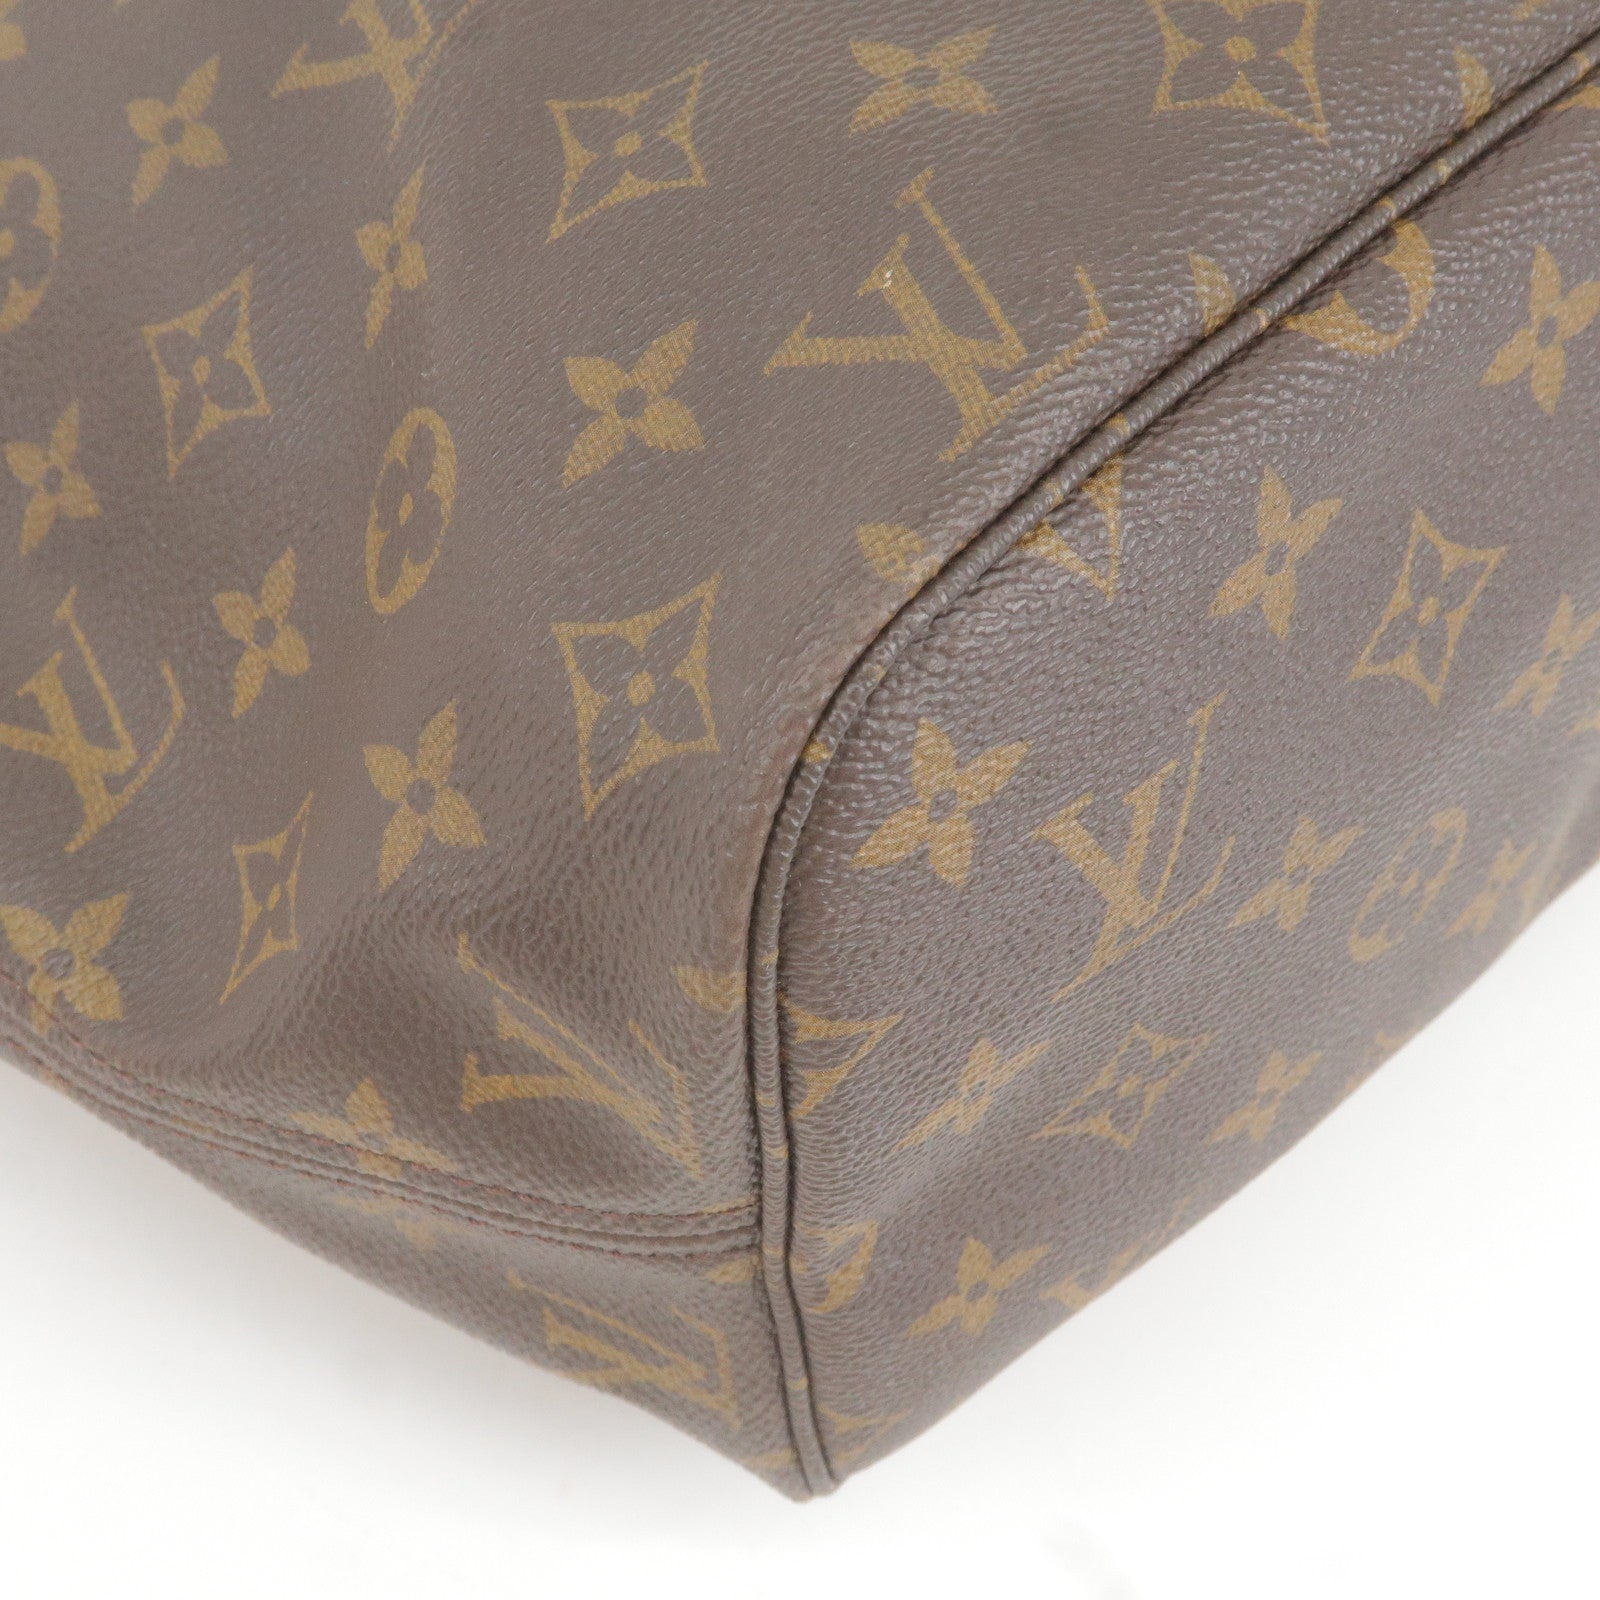 Louis Vuitton Monogram Empreint Malletage Bag Collection